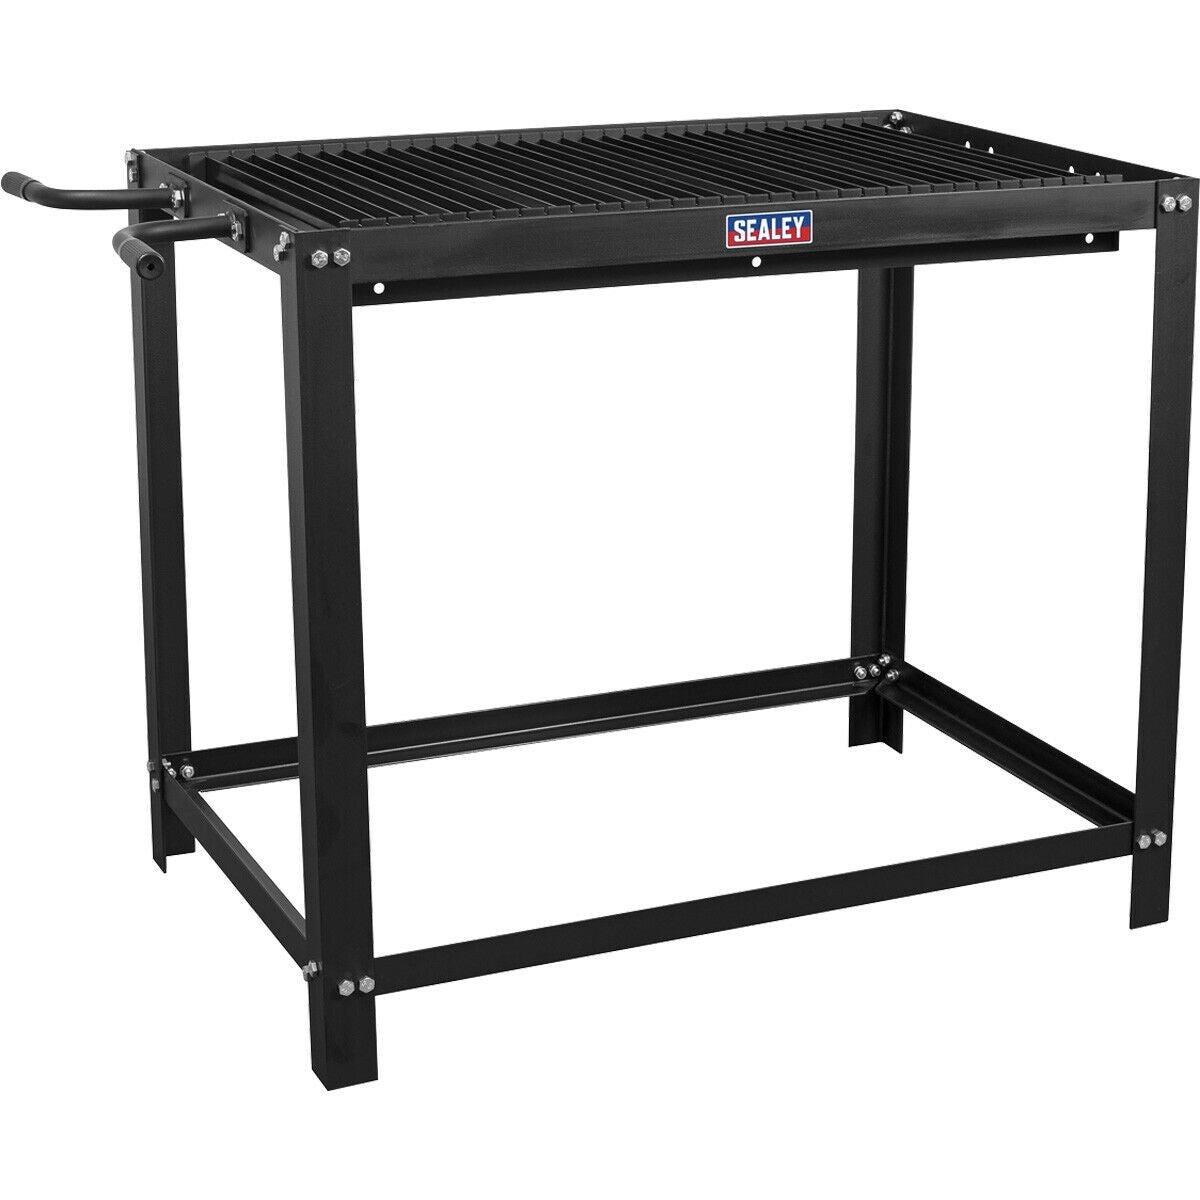 Plasma Cutting Table Workbench - Mild Steel - 113kg Capacity - Replaceable Slats